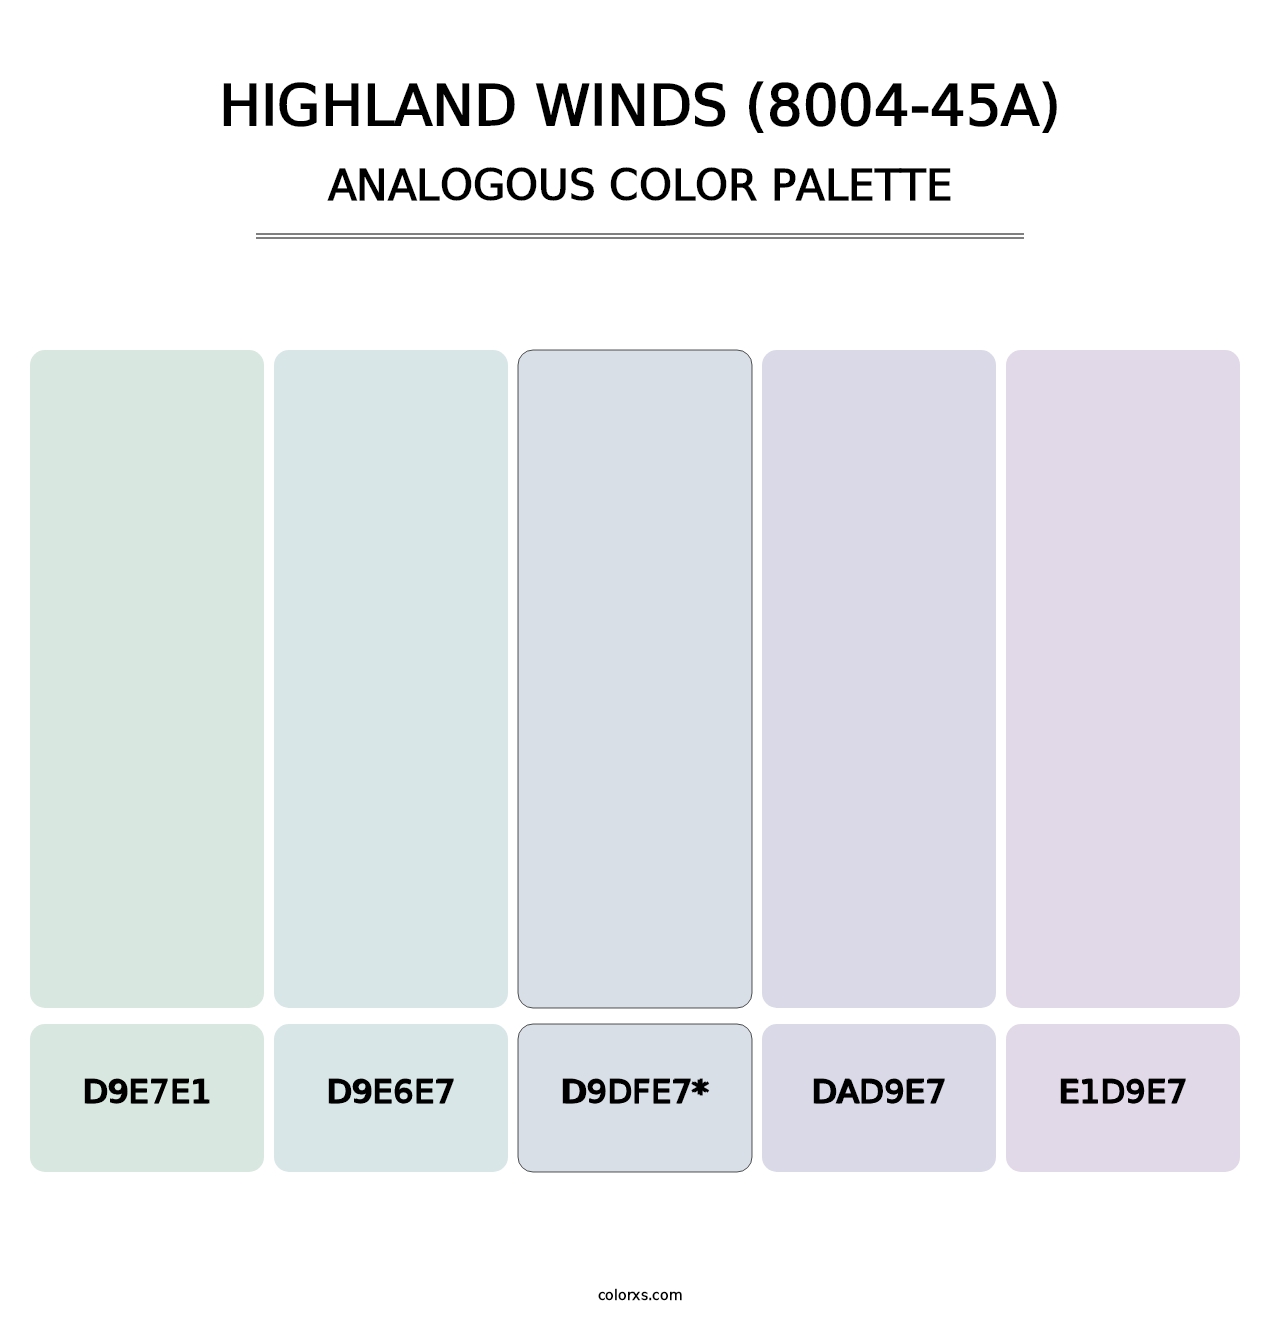 Highland Winds (8004-45A) - Analogous Color Palette